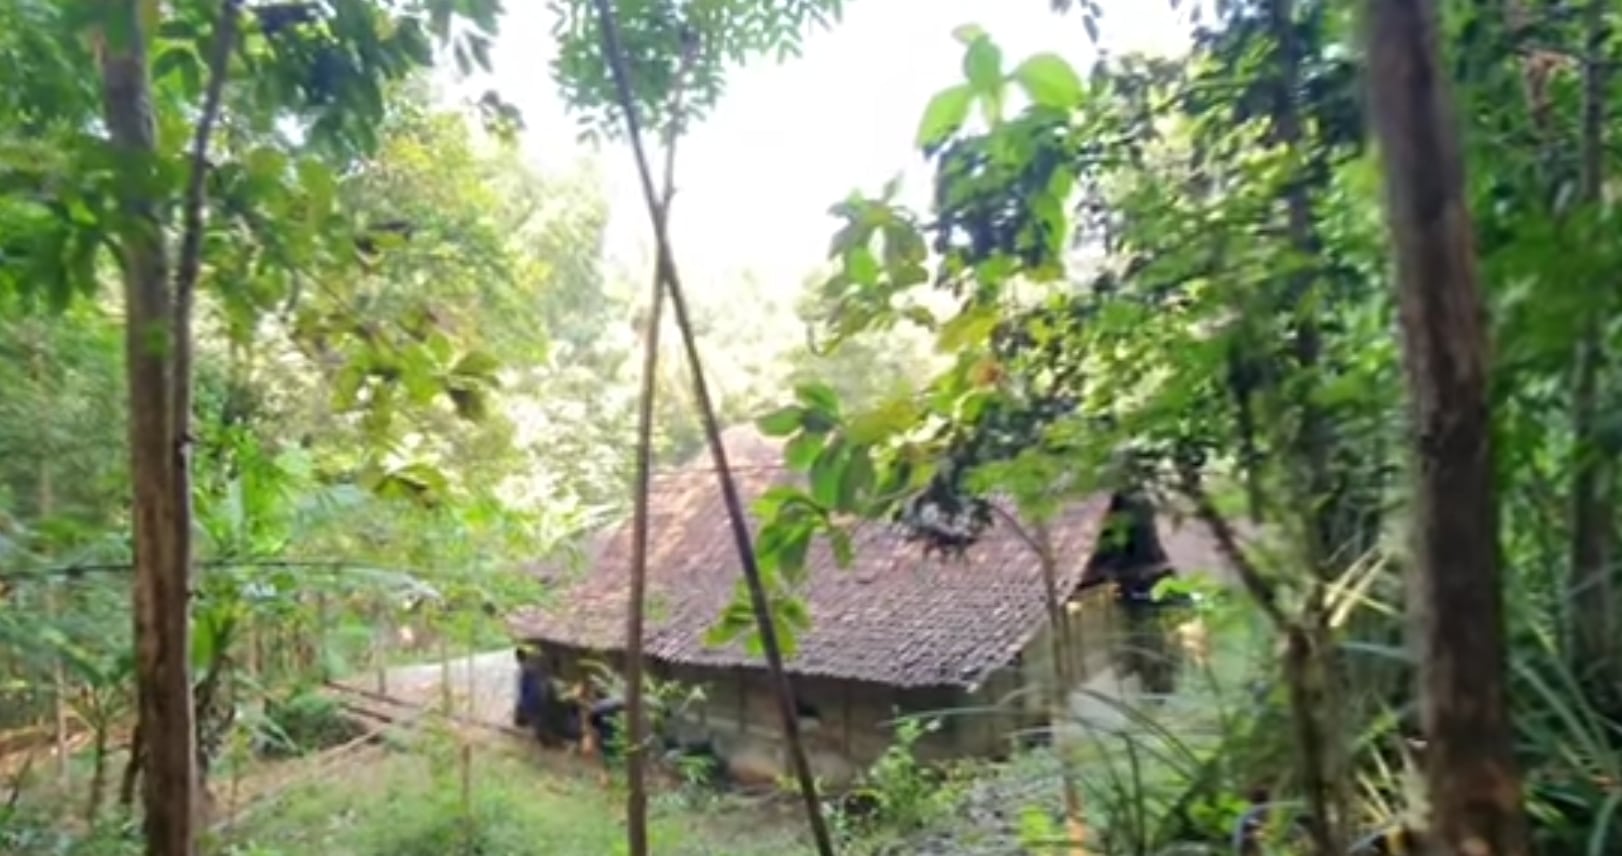 Rumah KKN Desa Penari Dijual setelah Dipakai Syuting, Pemiliknya Ketakutan